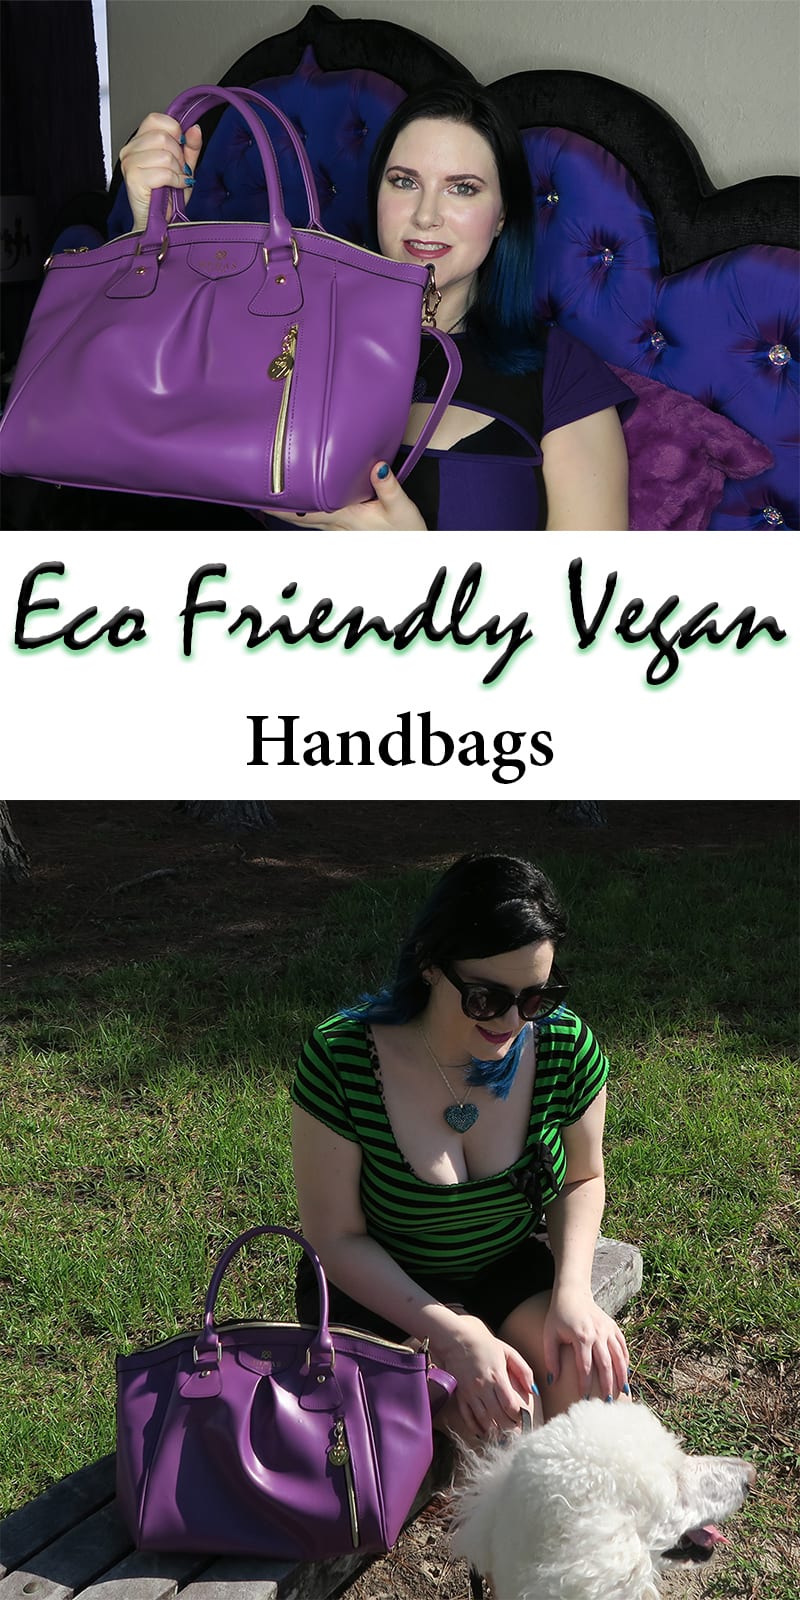 Animal Friendly Eco Friendly Vegan Handbags